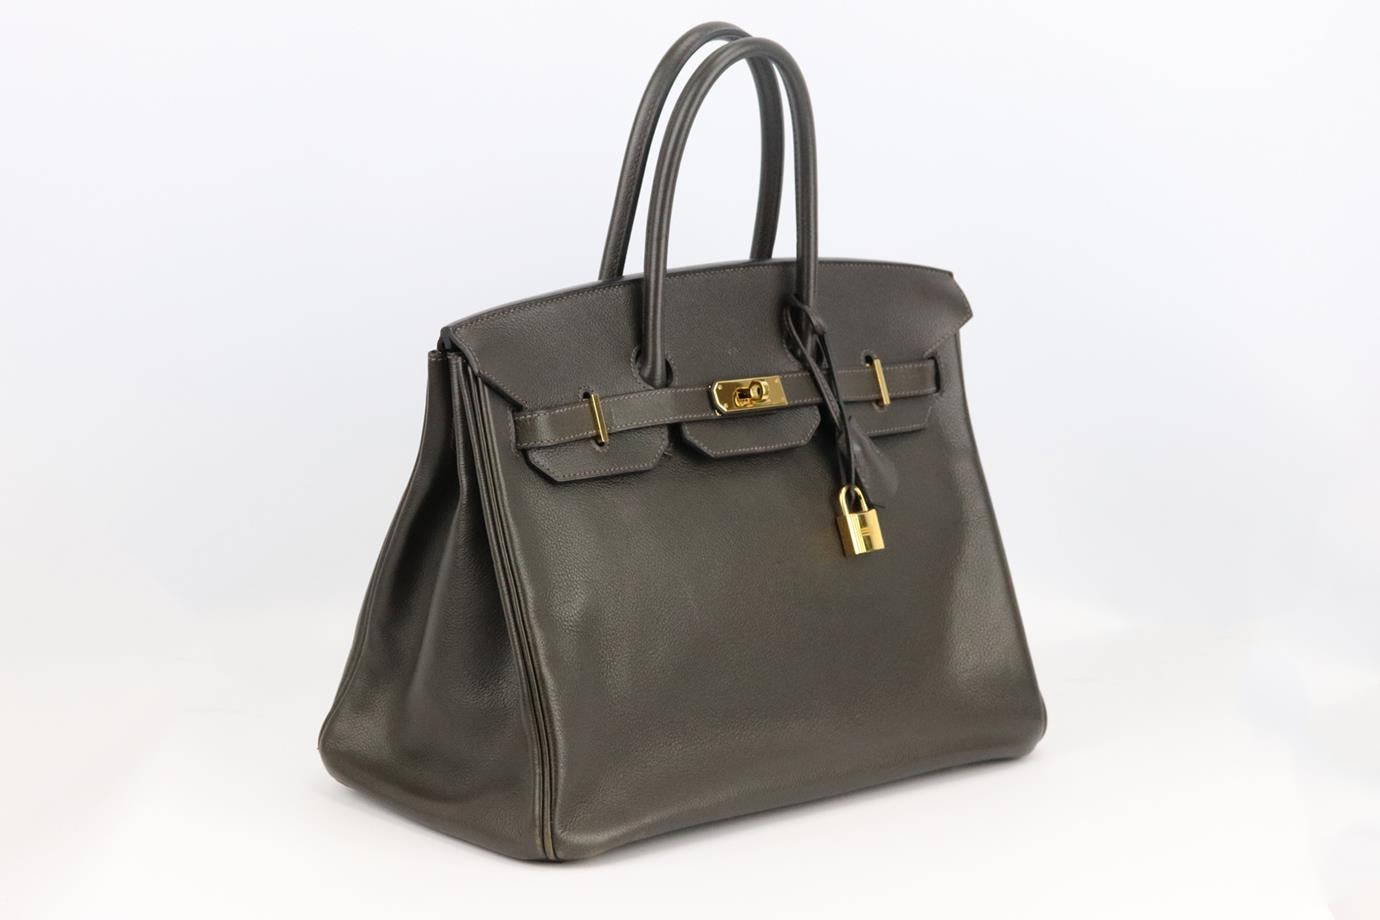 Women's Hermès 2010 Birkin 35cm Evergrain Leather Bag